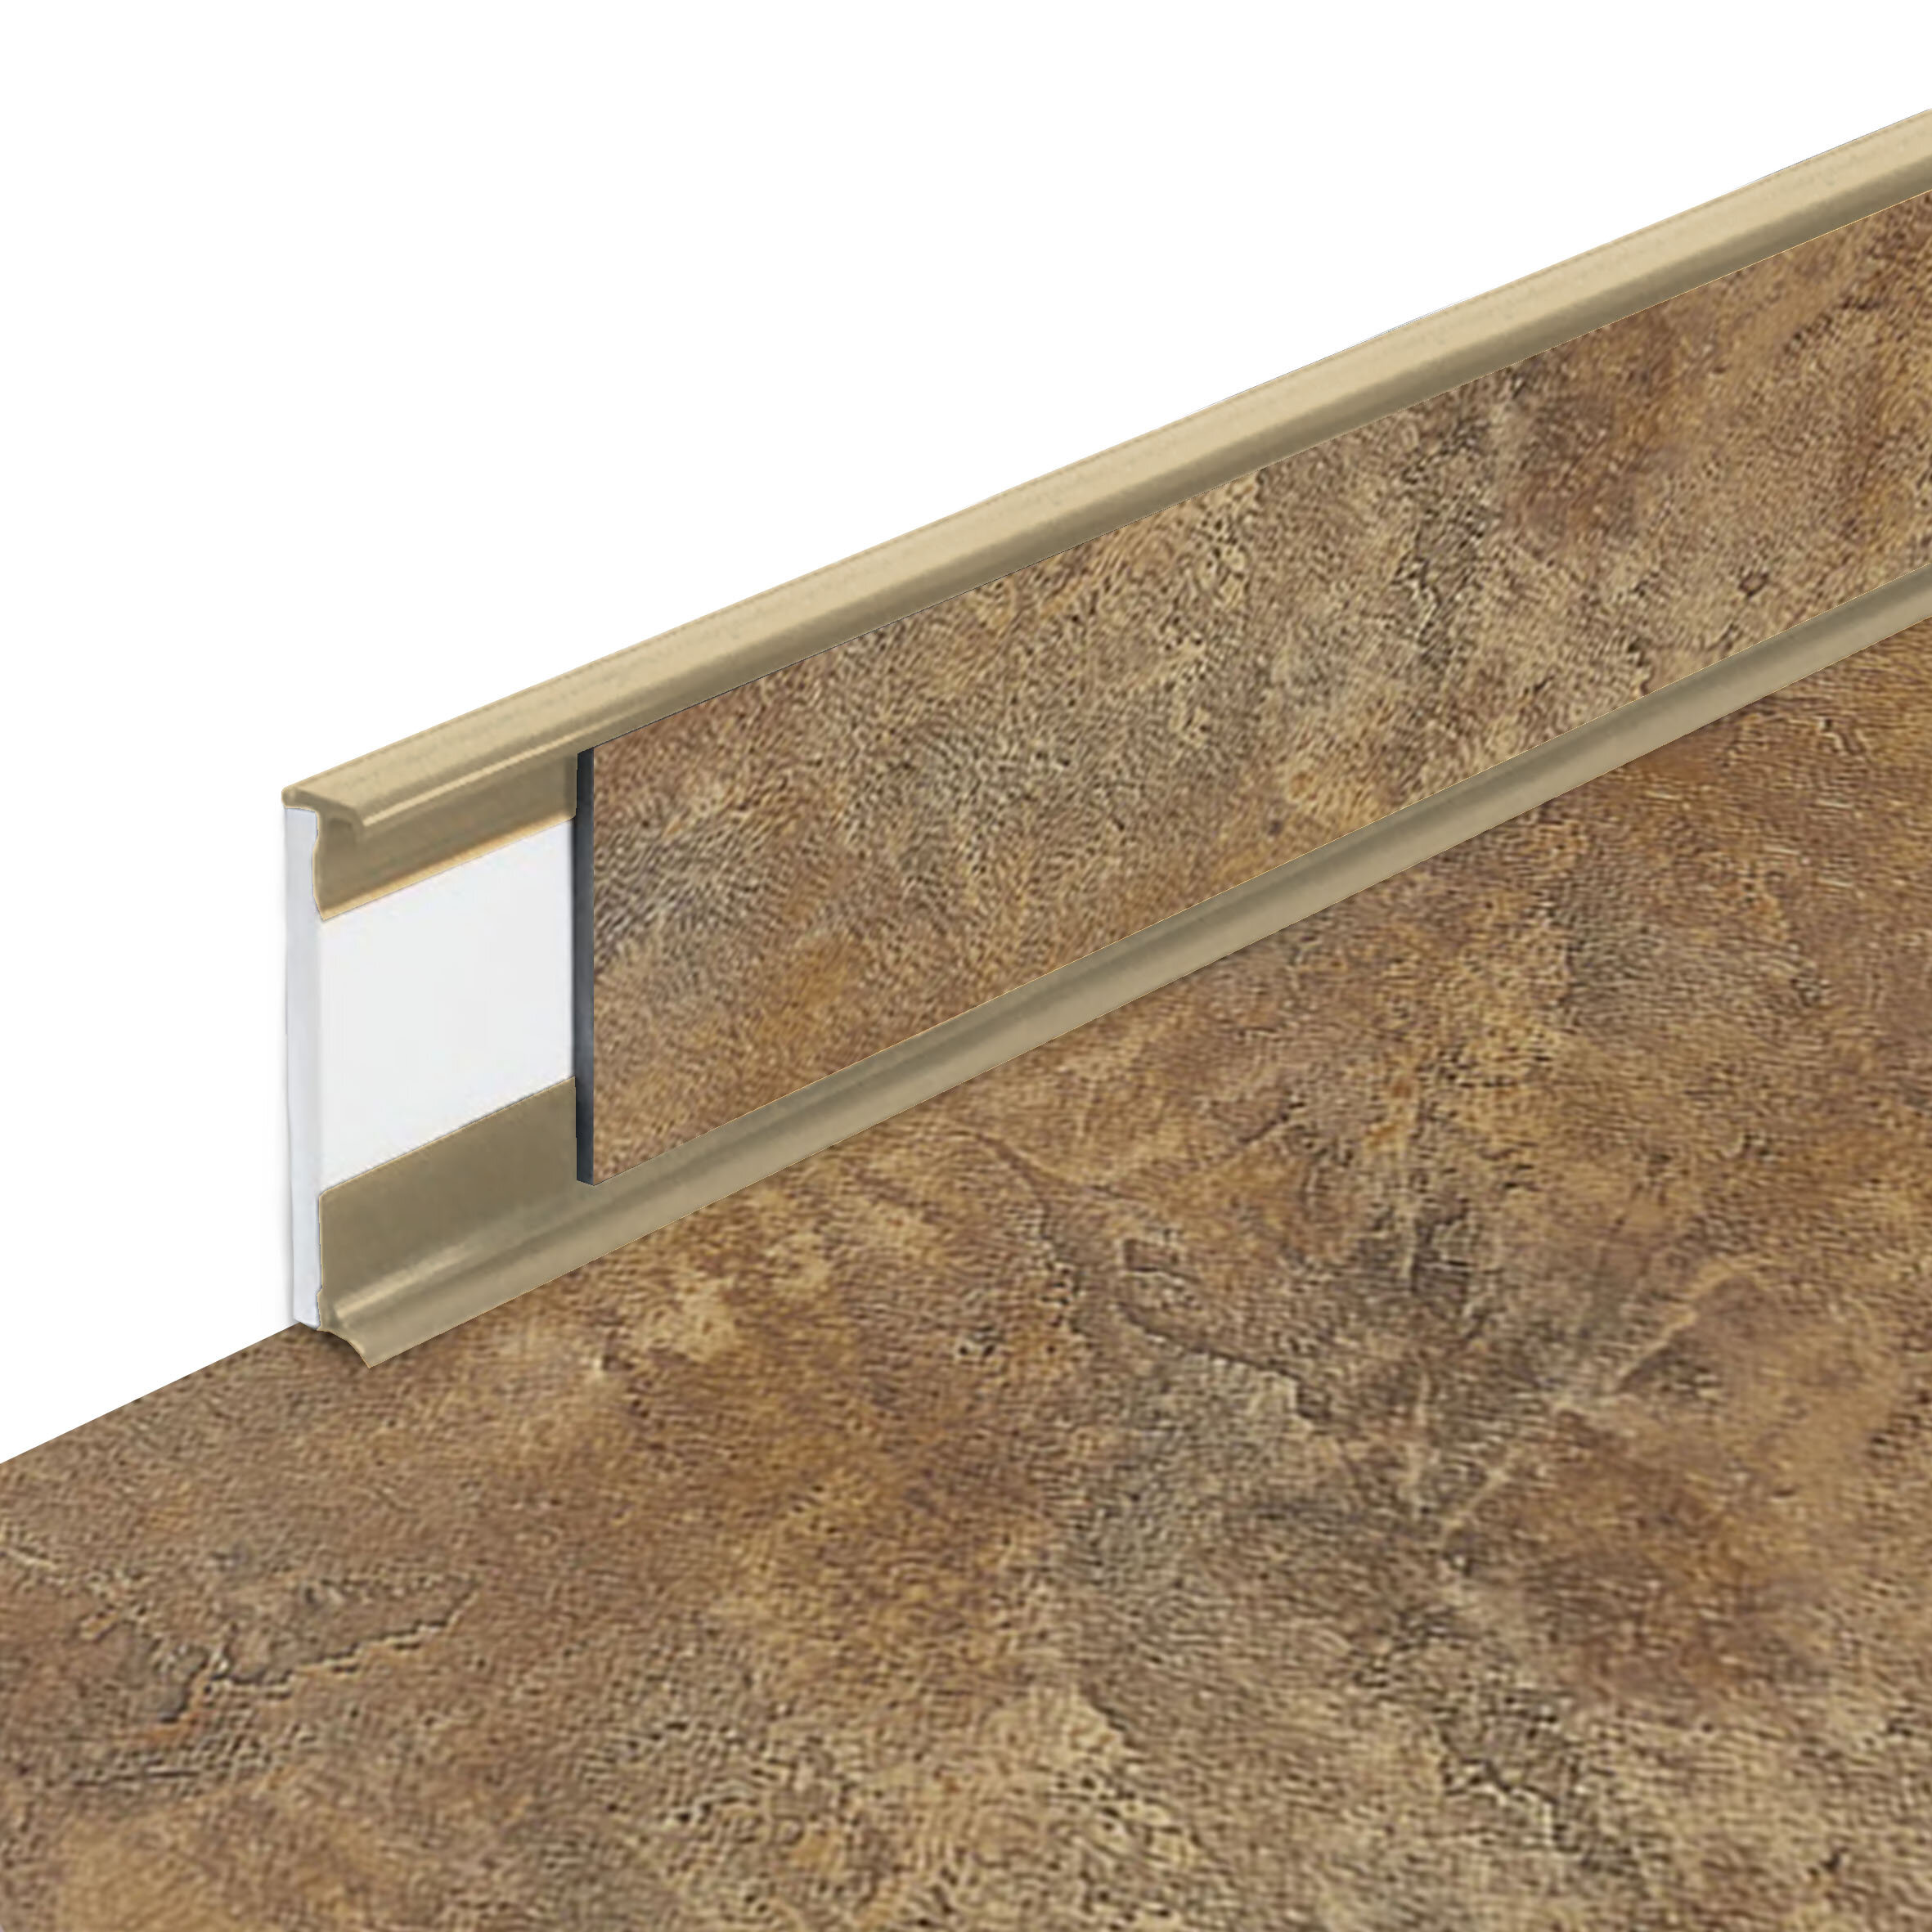 PVC vinylová soklová podlahová lišta Fortelock Business Forsen rusty steel C018 beige - délka 200 cm, výška 5,8 cm, tloušťka 1,2 cm